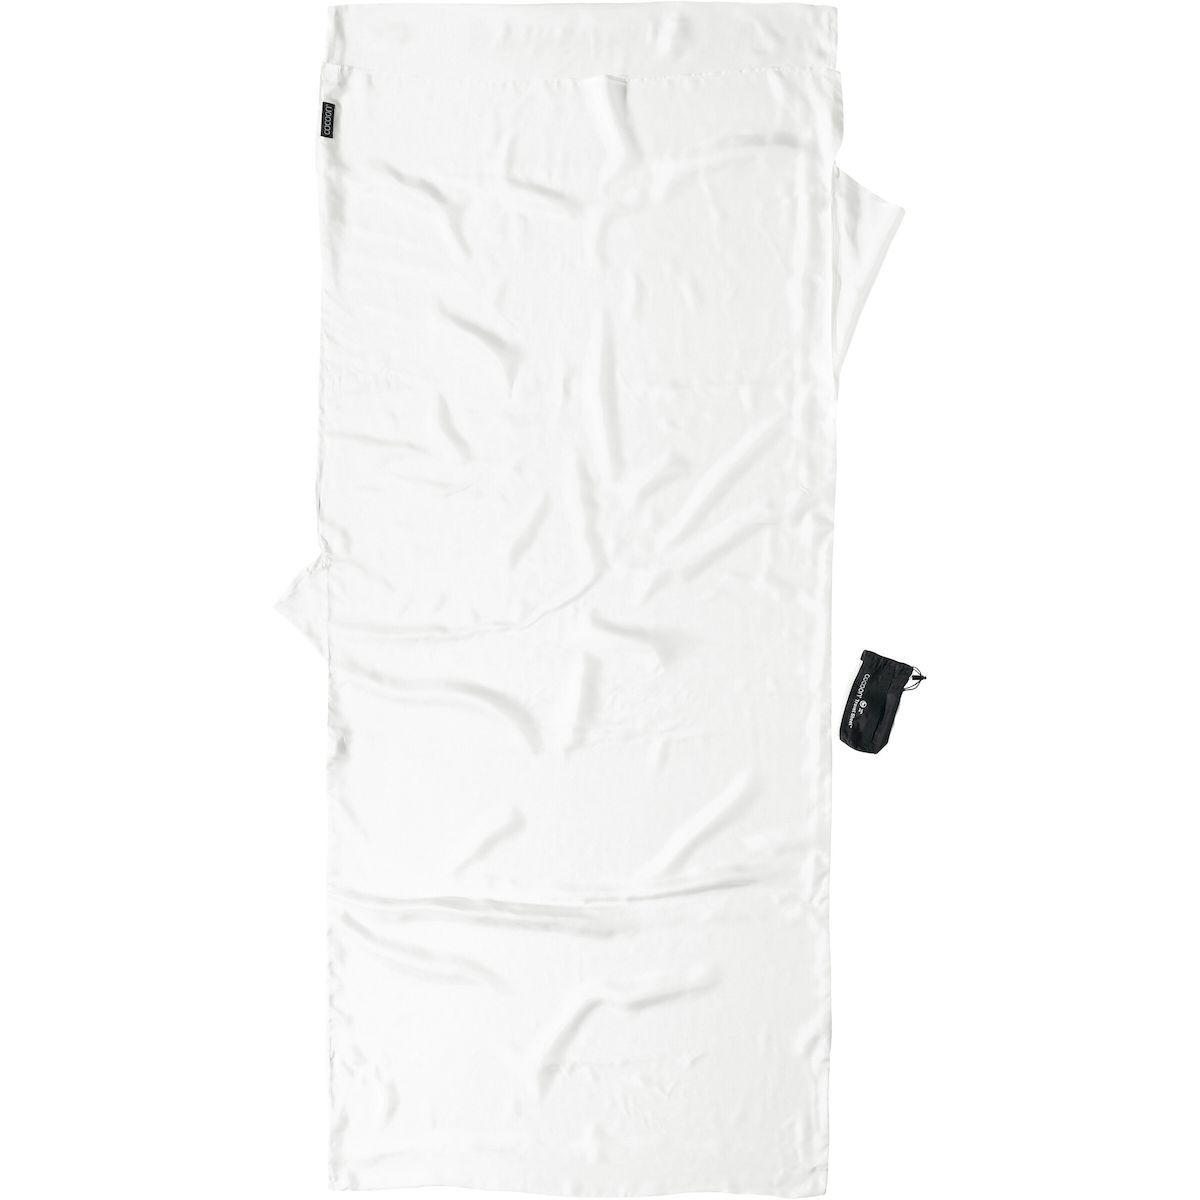 Cocoon Silk TravelSheet - Sleeping bag liner